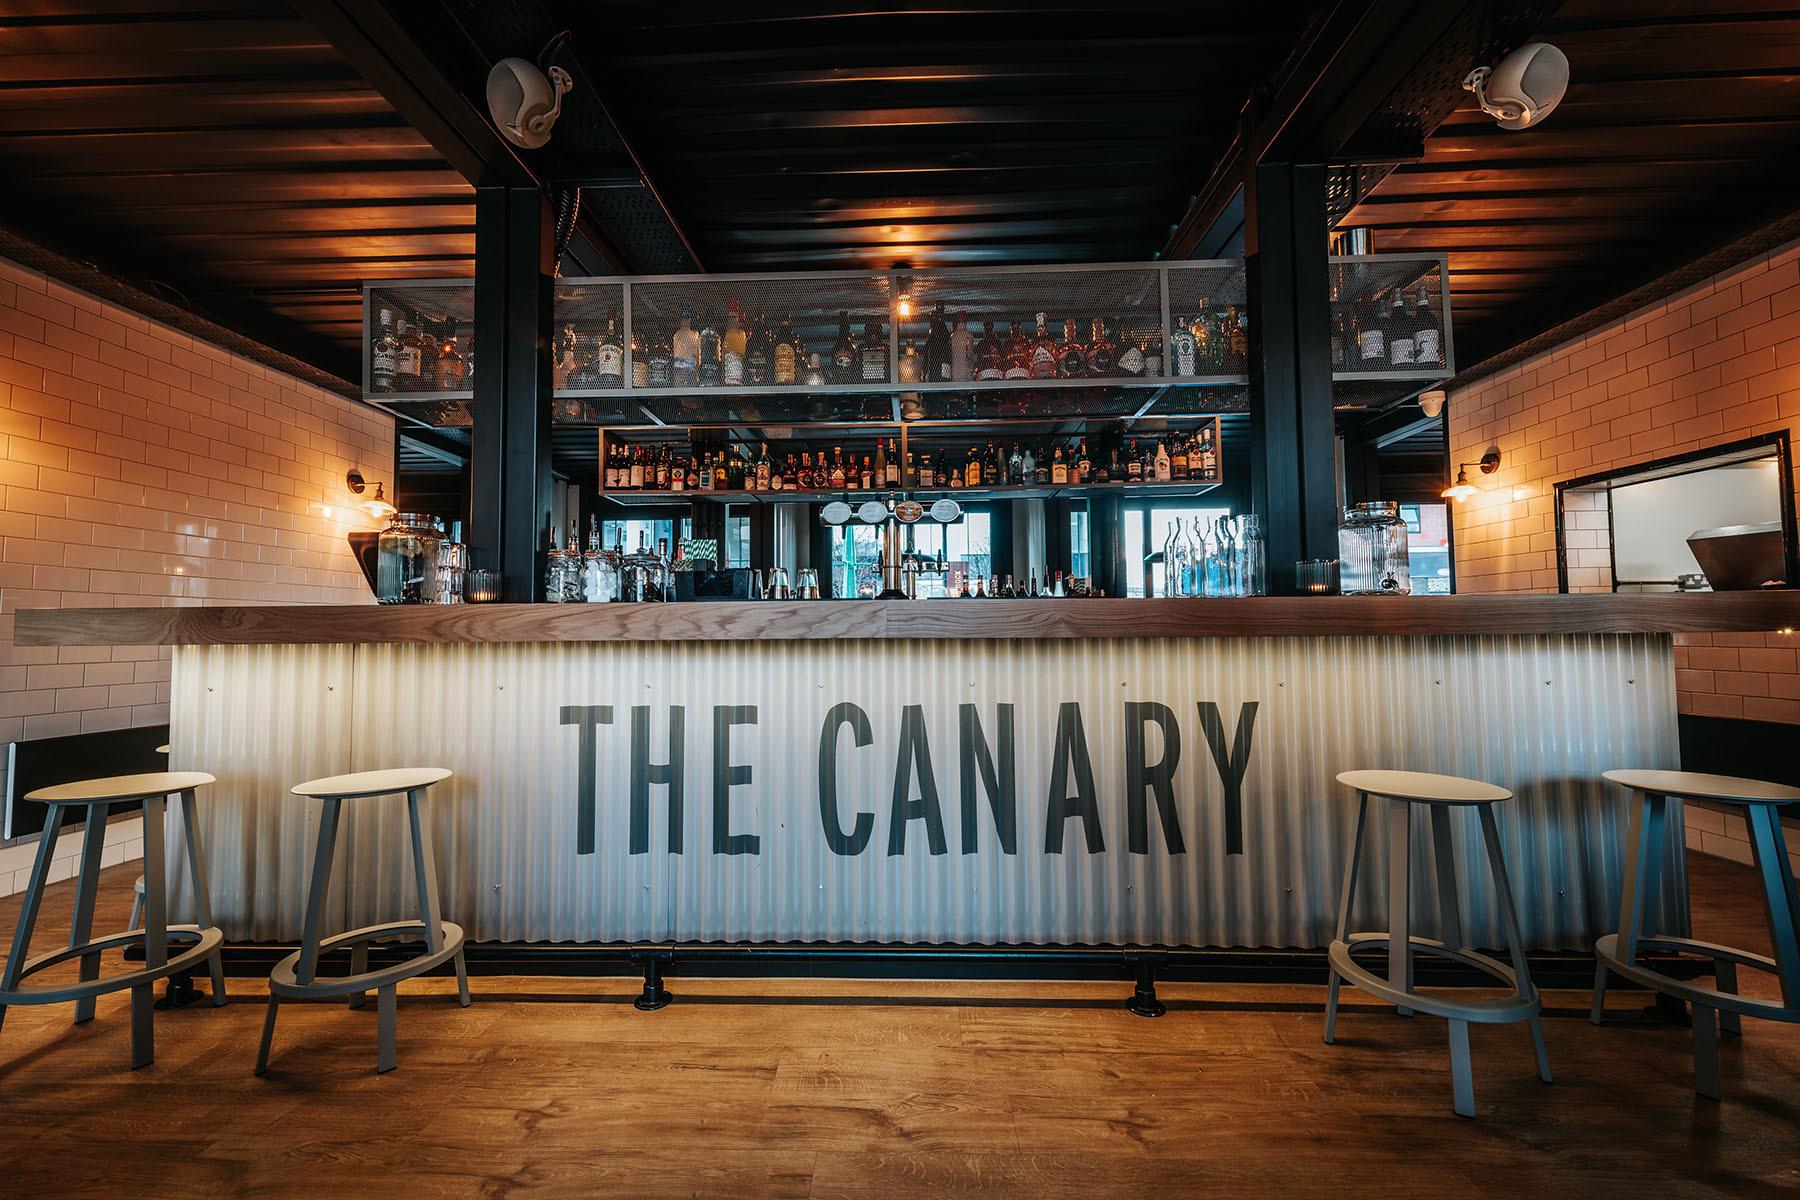 The Canary Bar Full Venue, Canary Bar photo #1